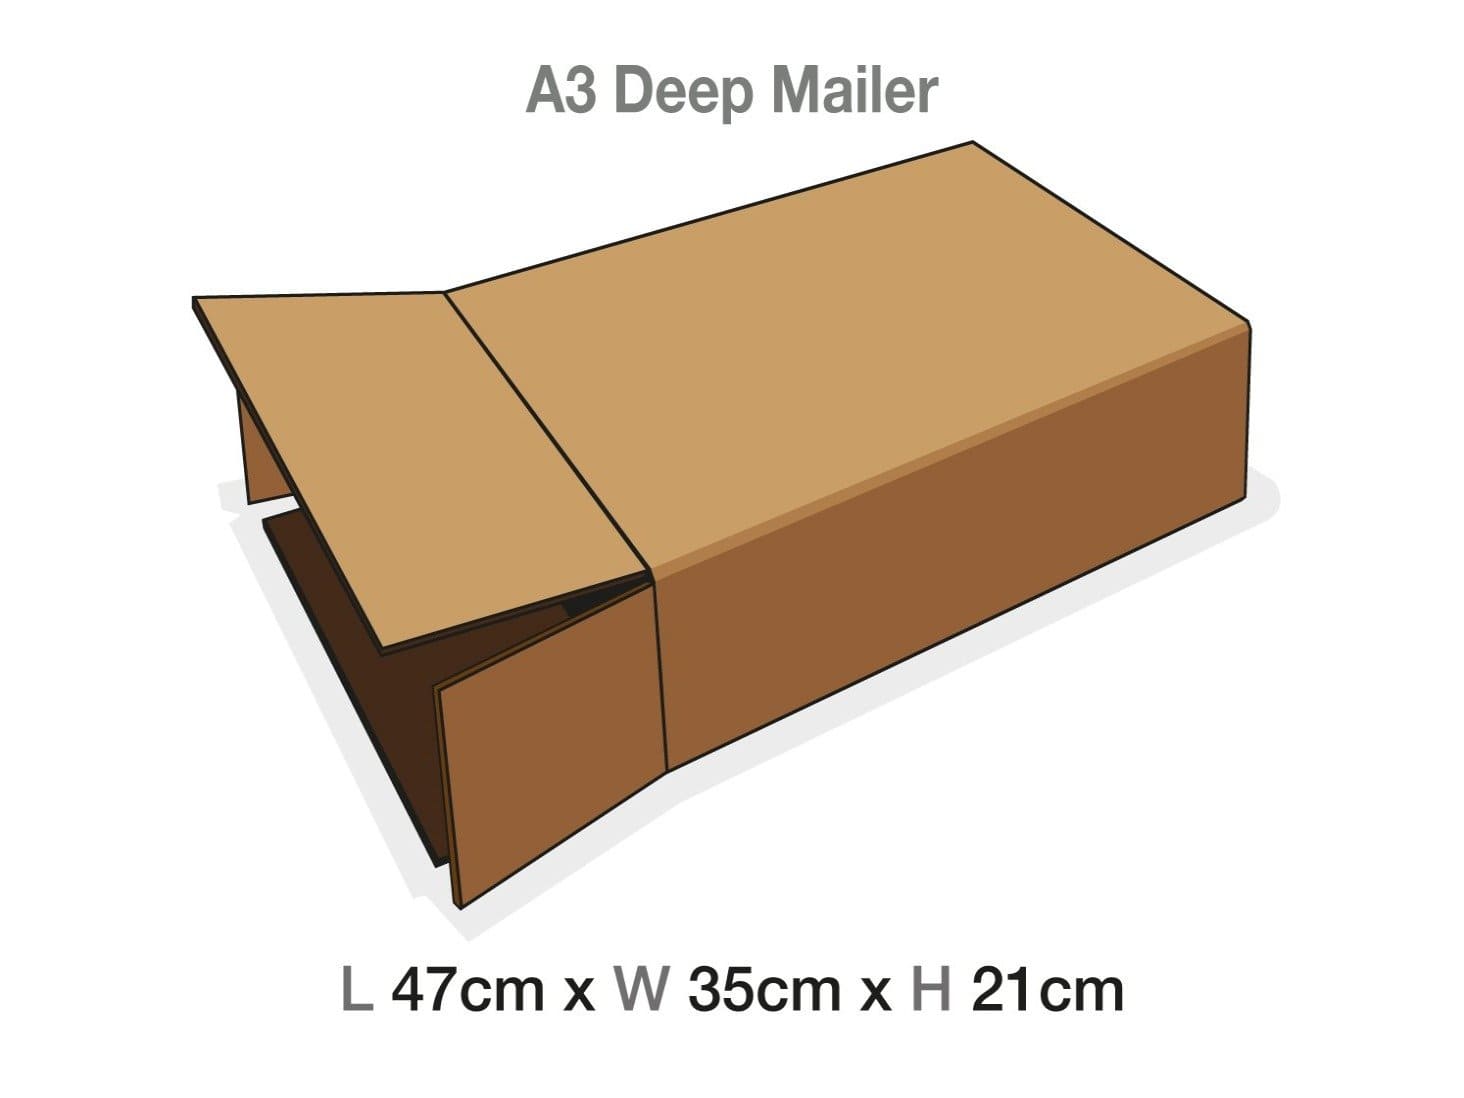 Sample A3 Deep Gift Box Mailing Carton